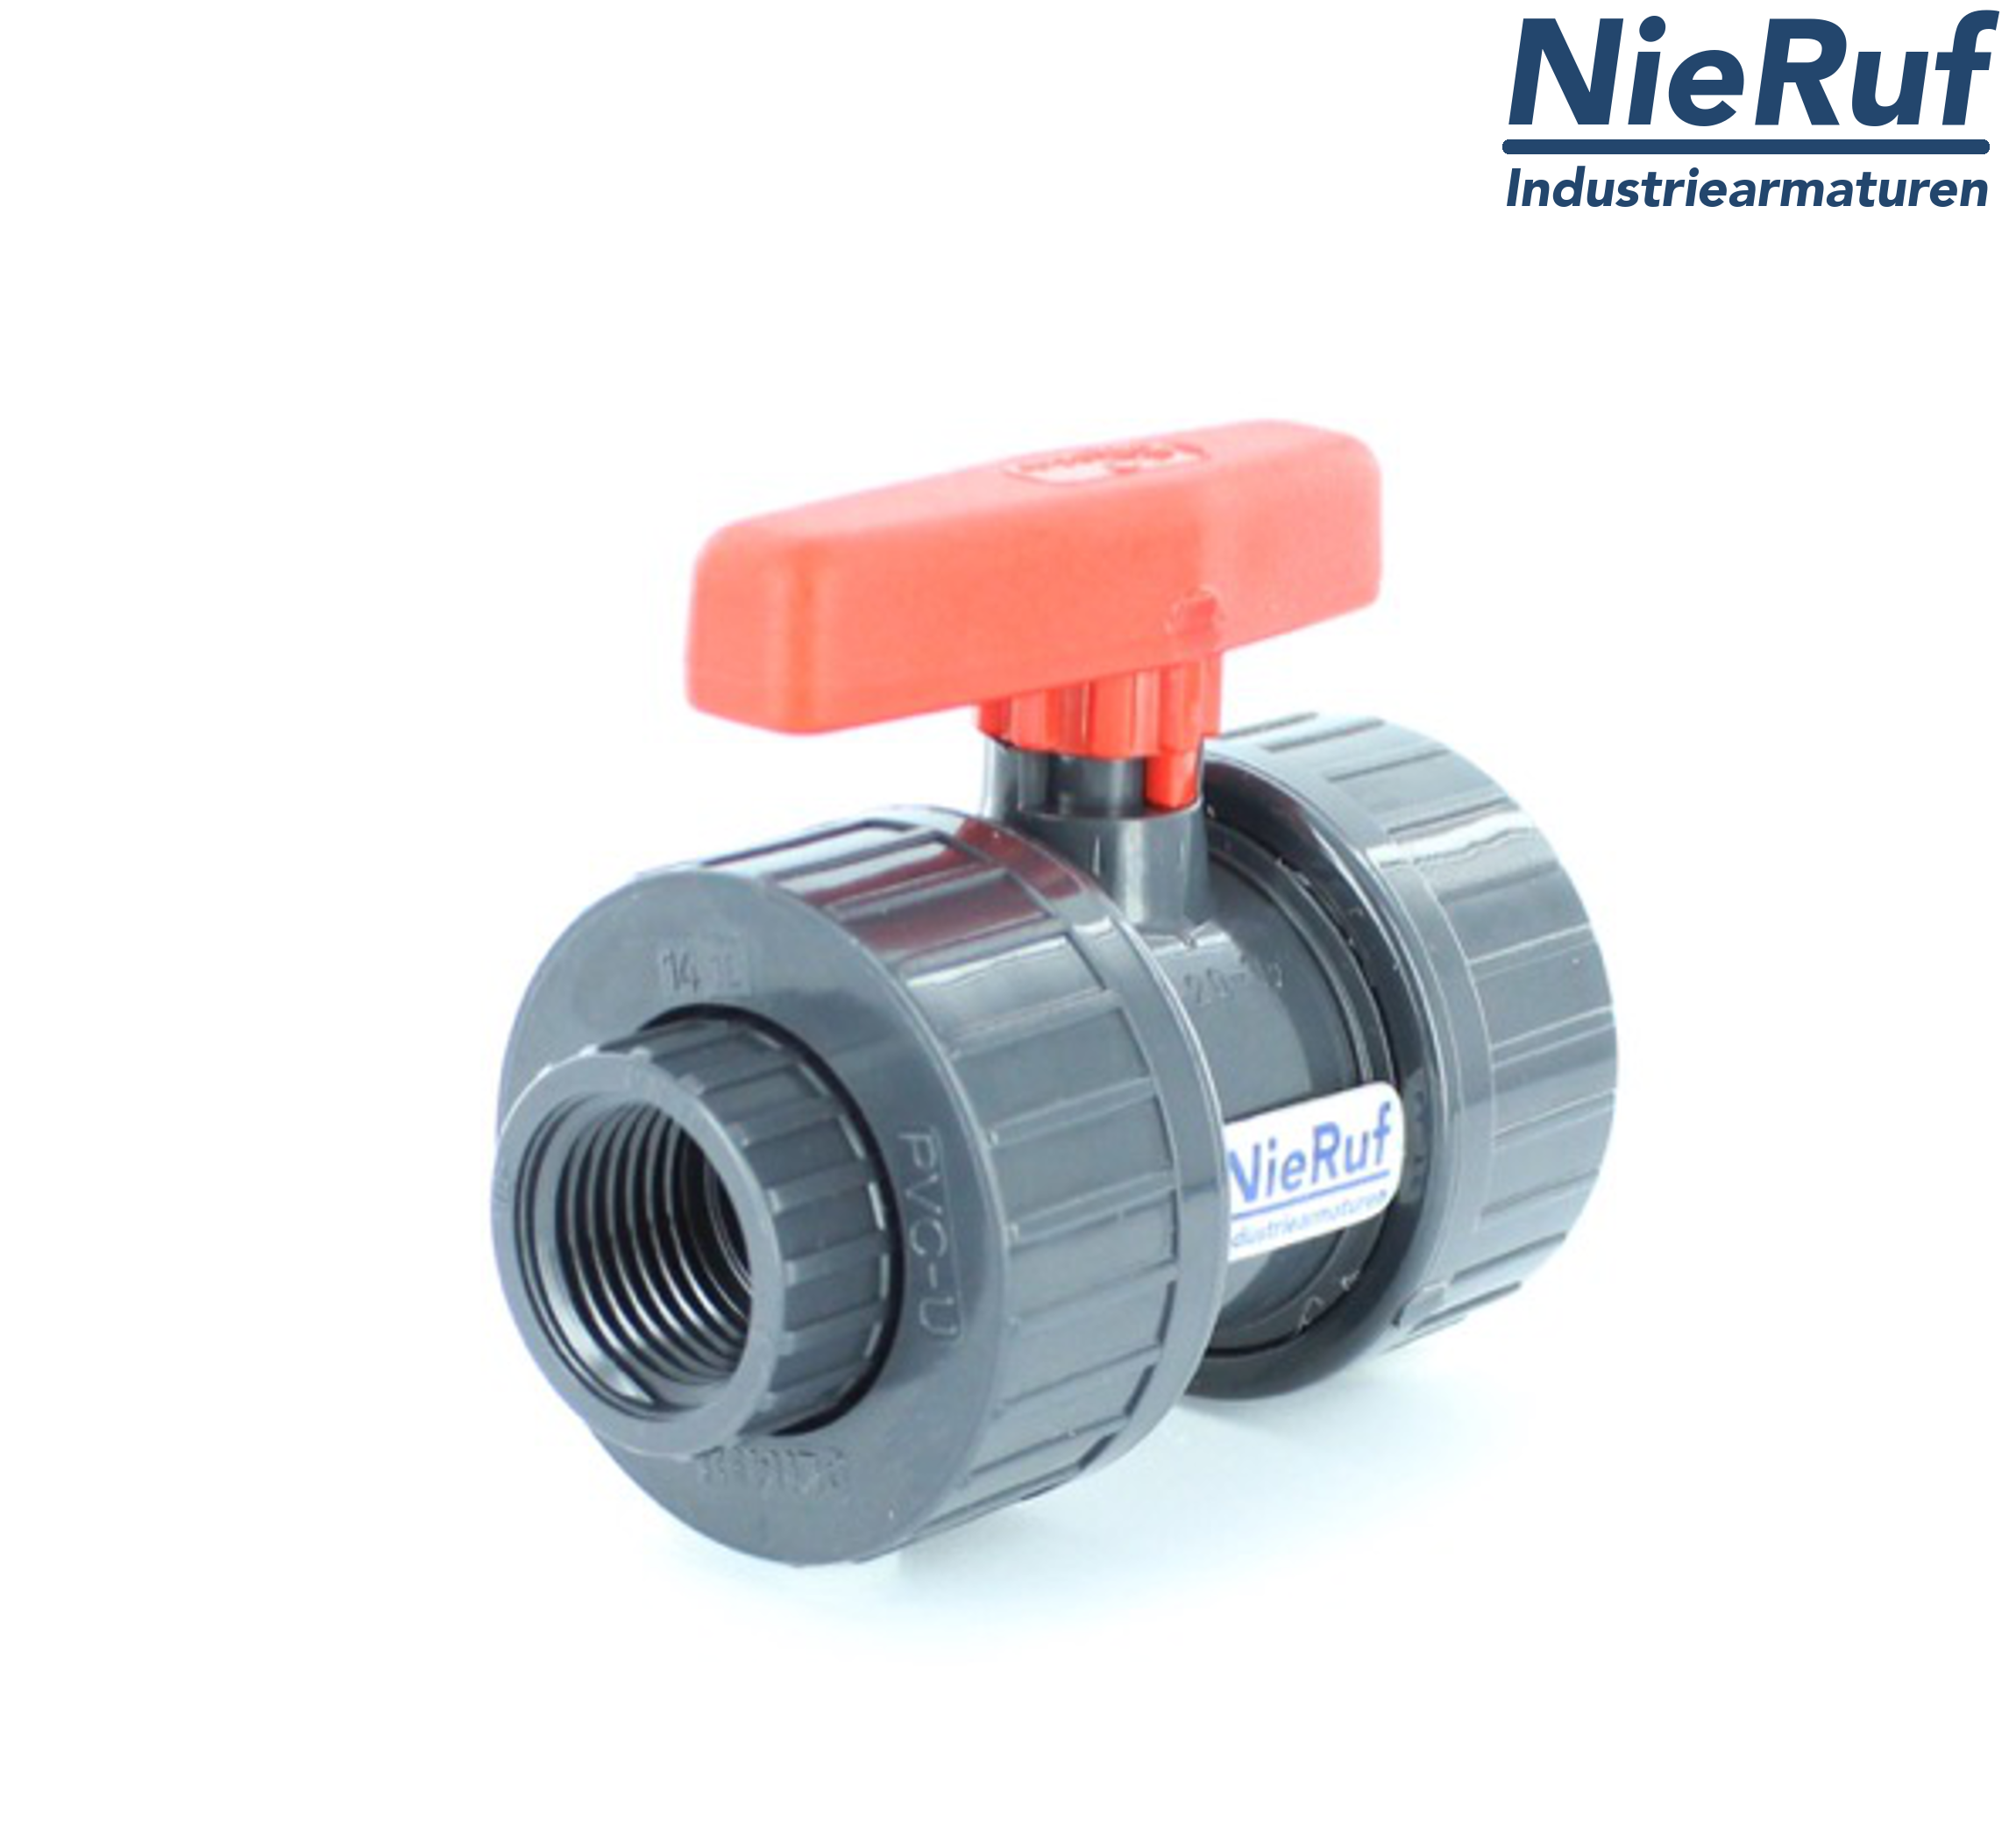 PVC-ball valve DN80 - 3" inch KK02 Hytrel/EPDM